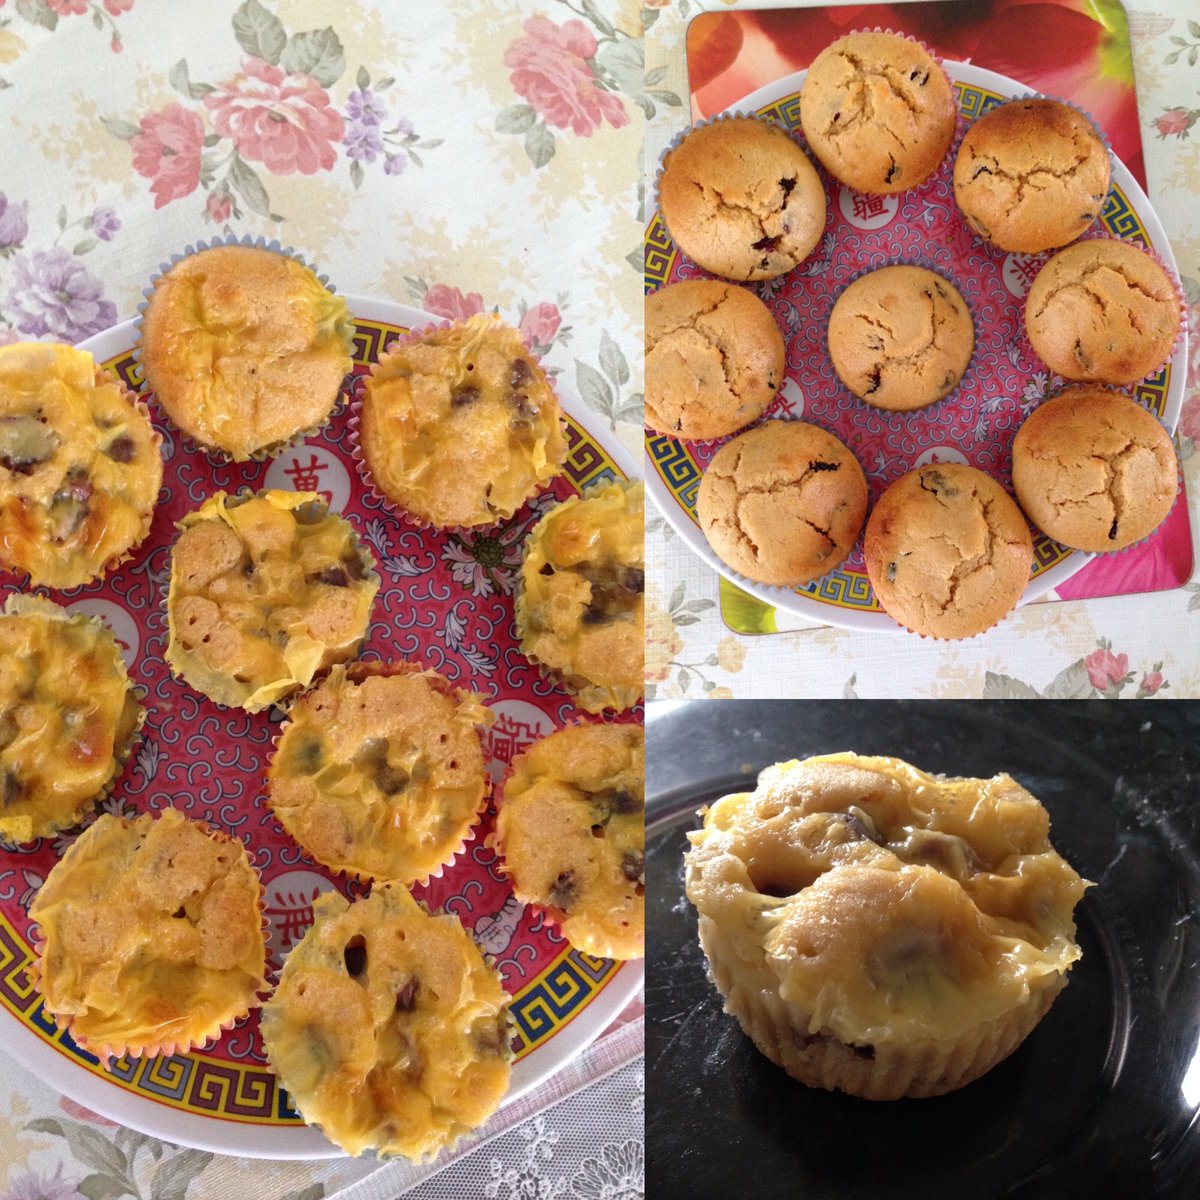 Craisin muffins and craisin muffins with custard helenscchin.com/2015/04/17/cra… via @helenscchin